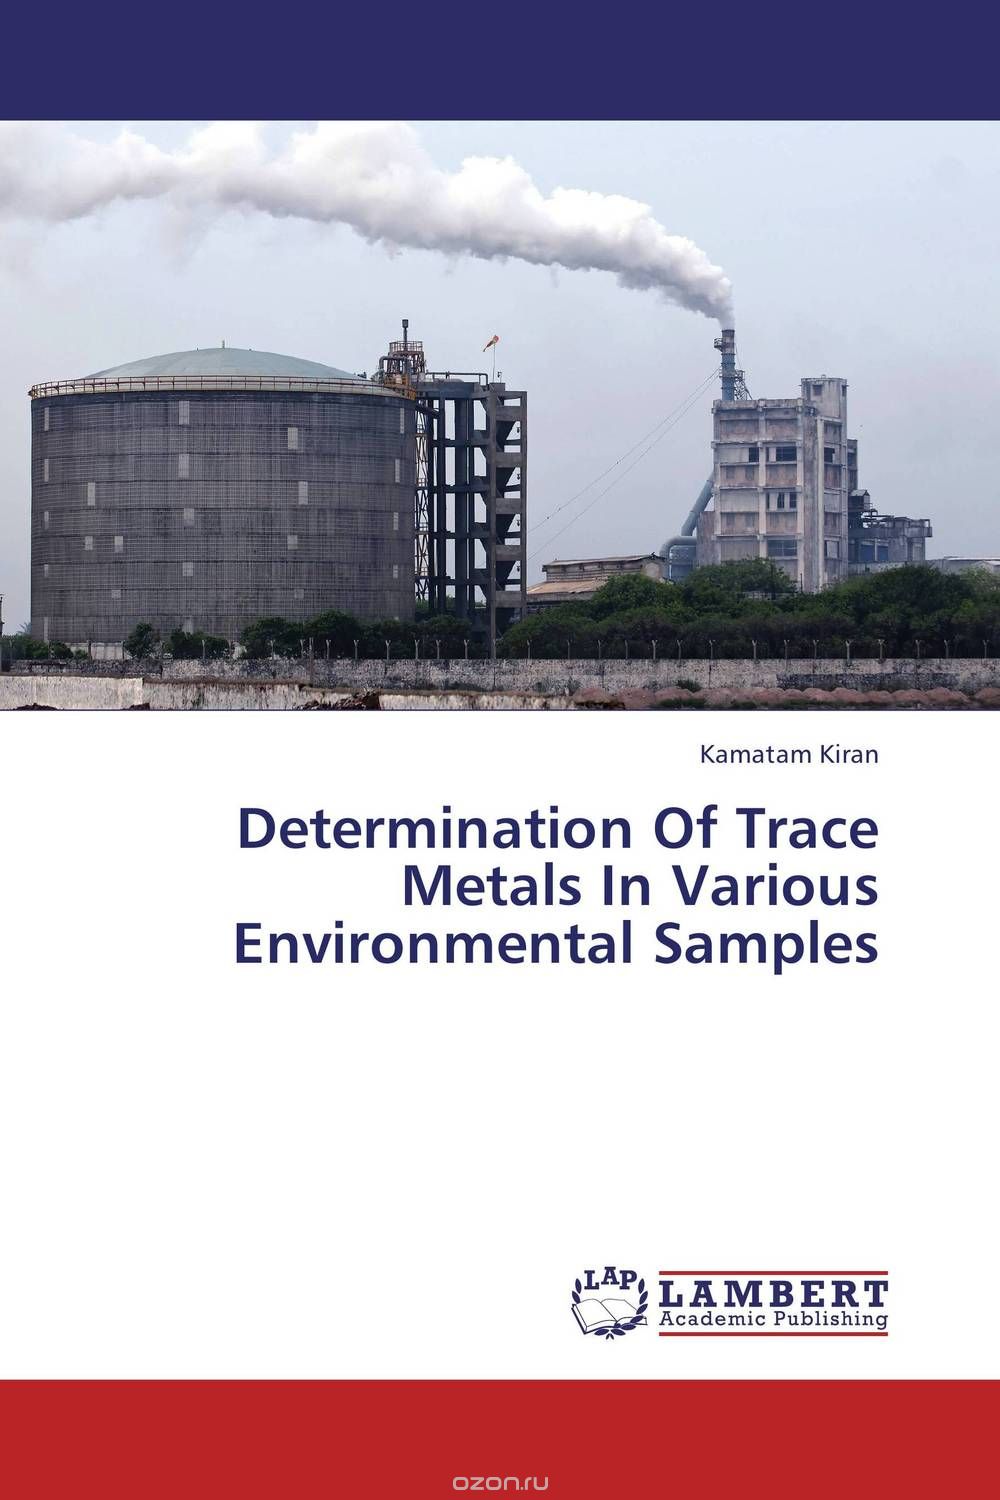 Скачать книгу "Determination Of Trace Metals In Various Environmental Samples"